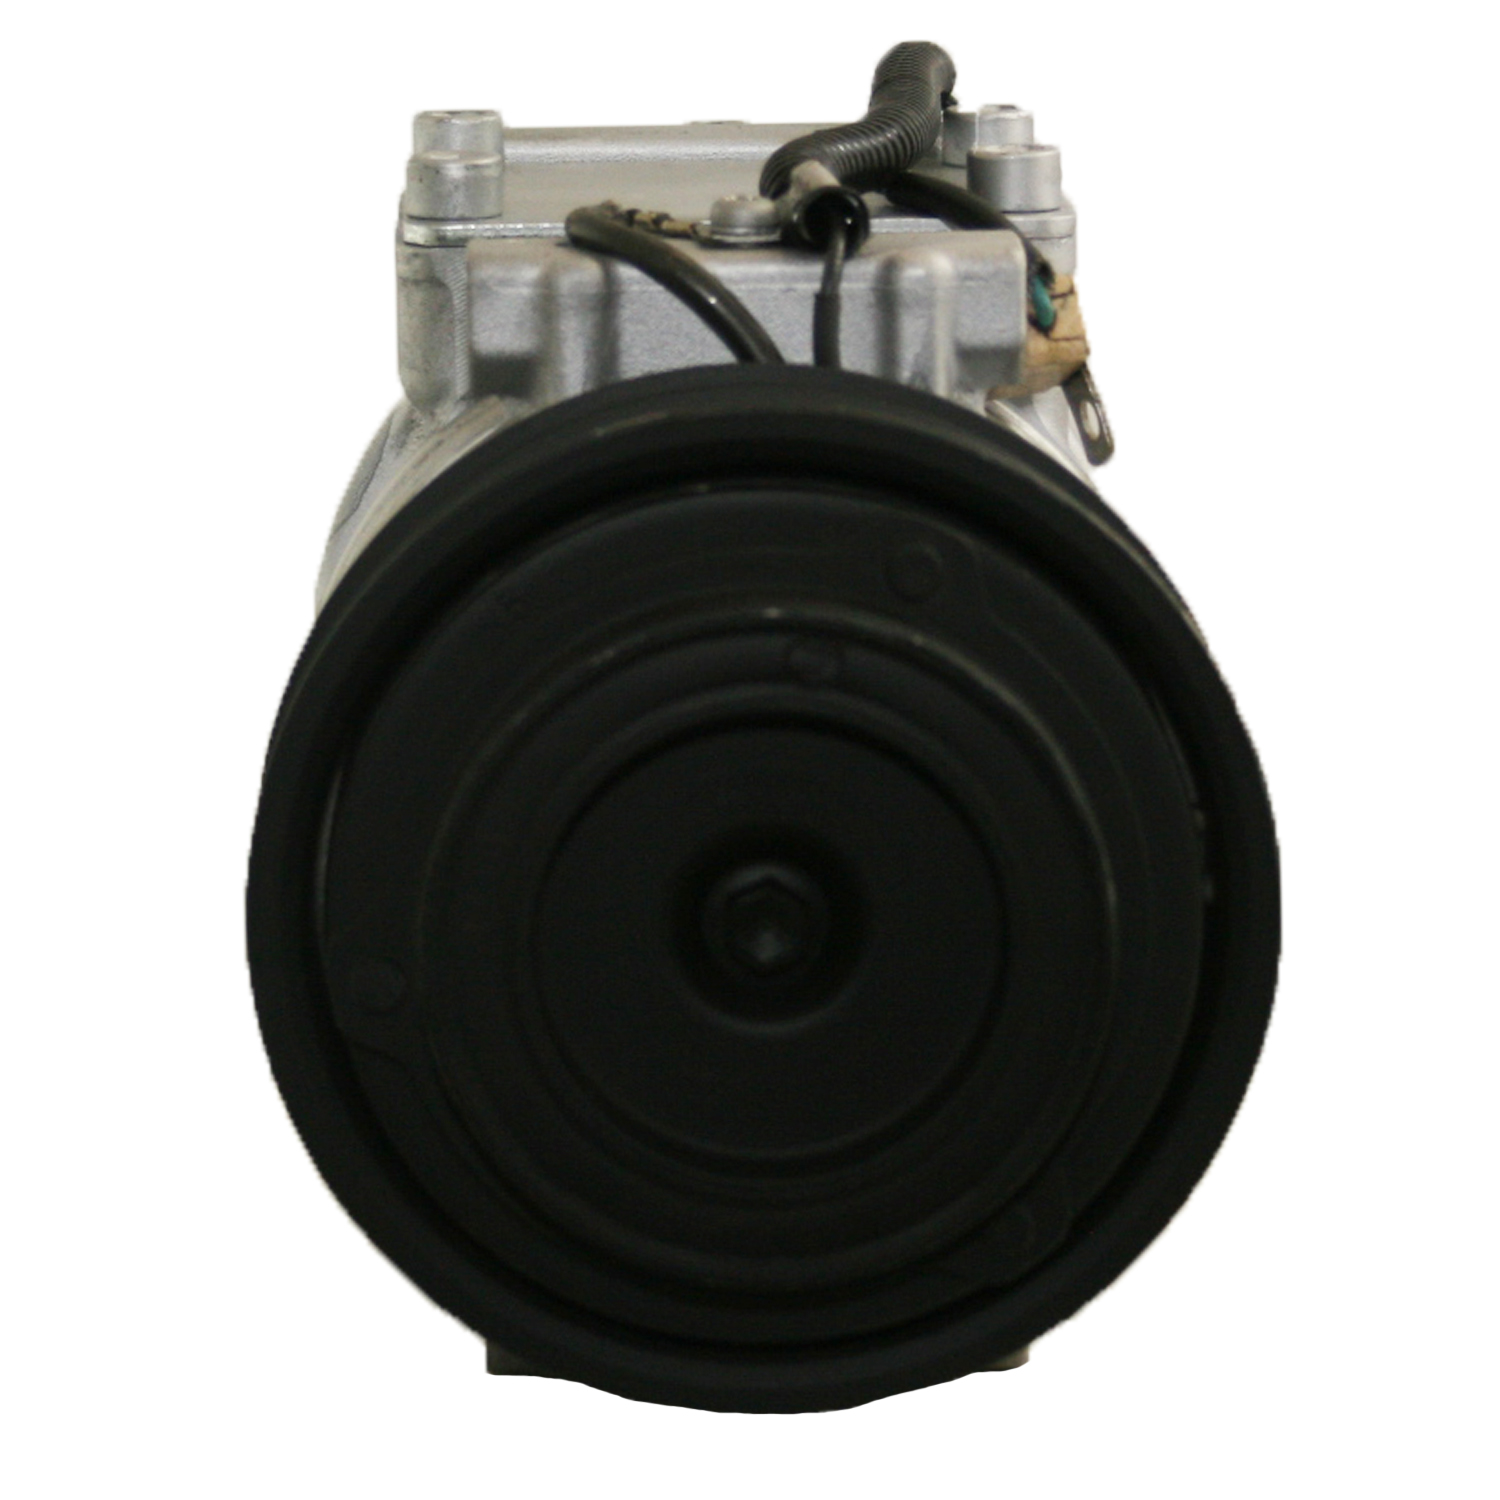 TCW Compressor 31214.801 Remanufactured Product Image field_60b6a13a6e67c